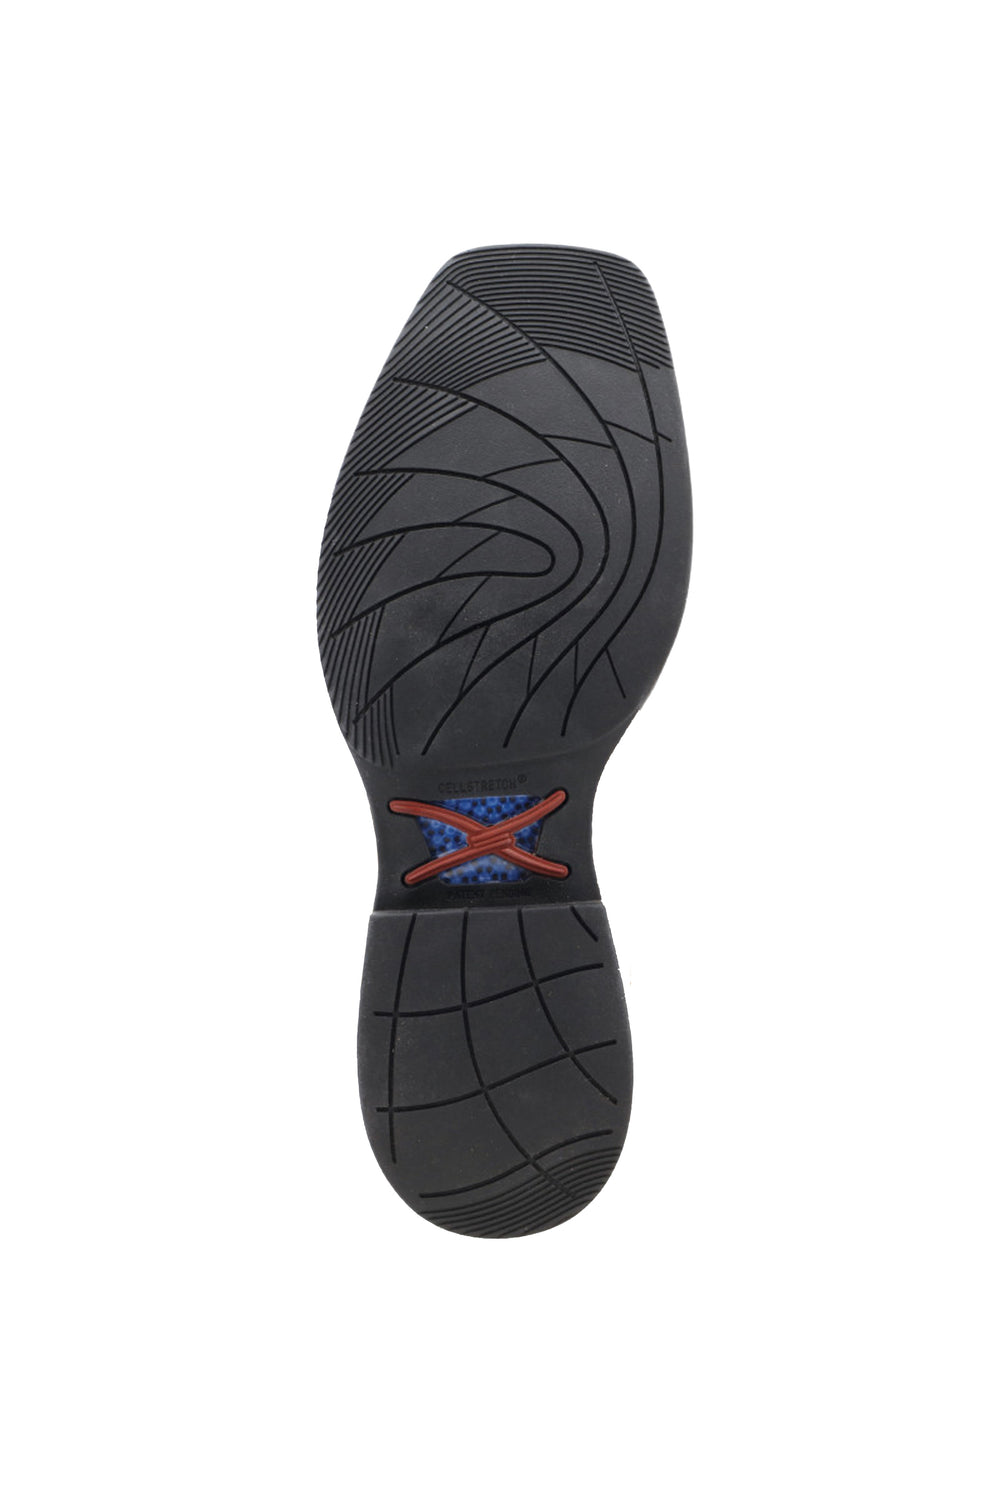 Twisted X - Mens 11 Tech X1 Tan Boot